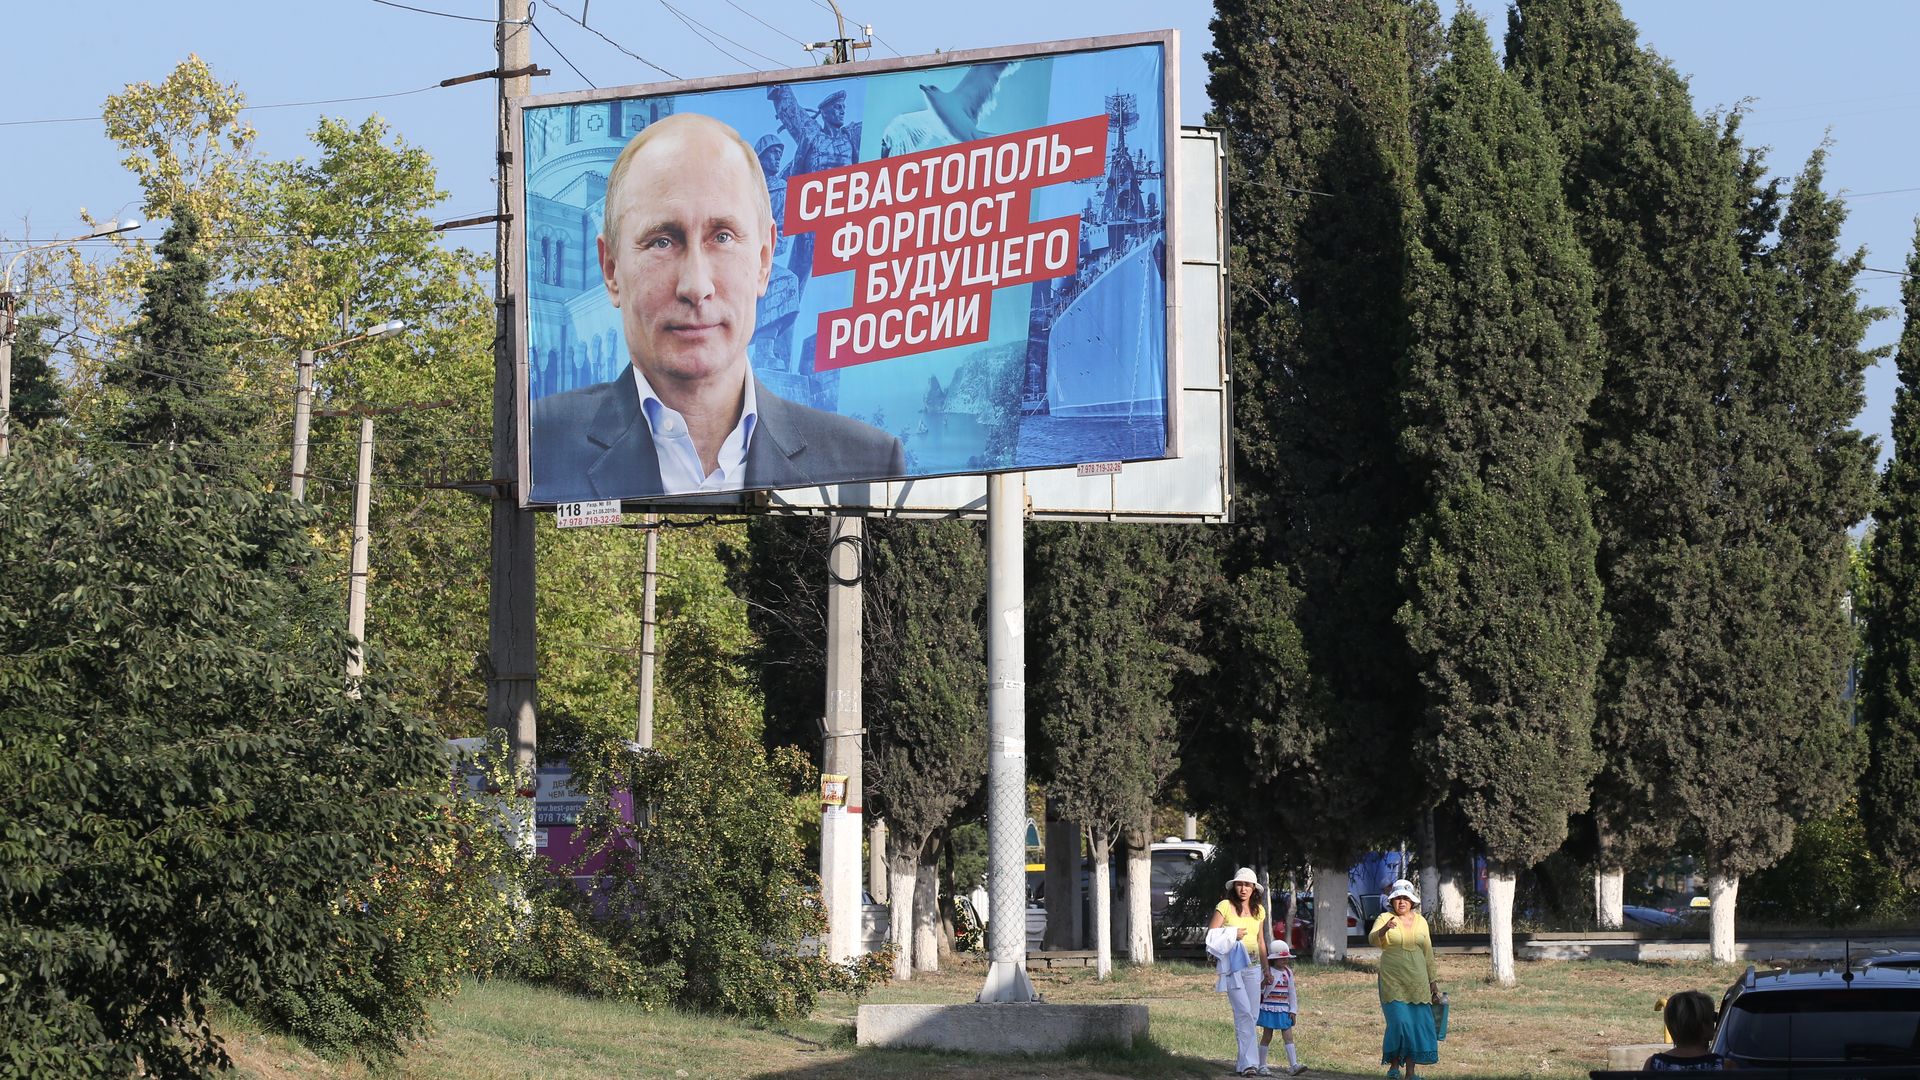 Billboard in Sevastopol, Crimea, with Putin's face